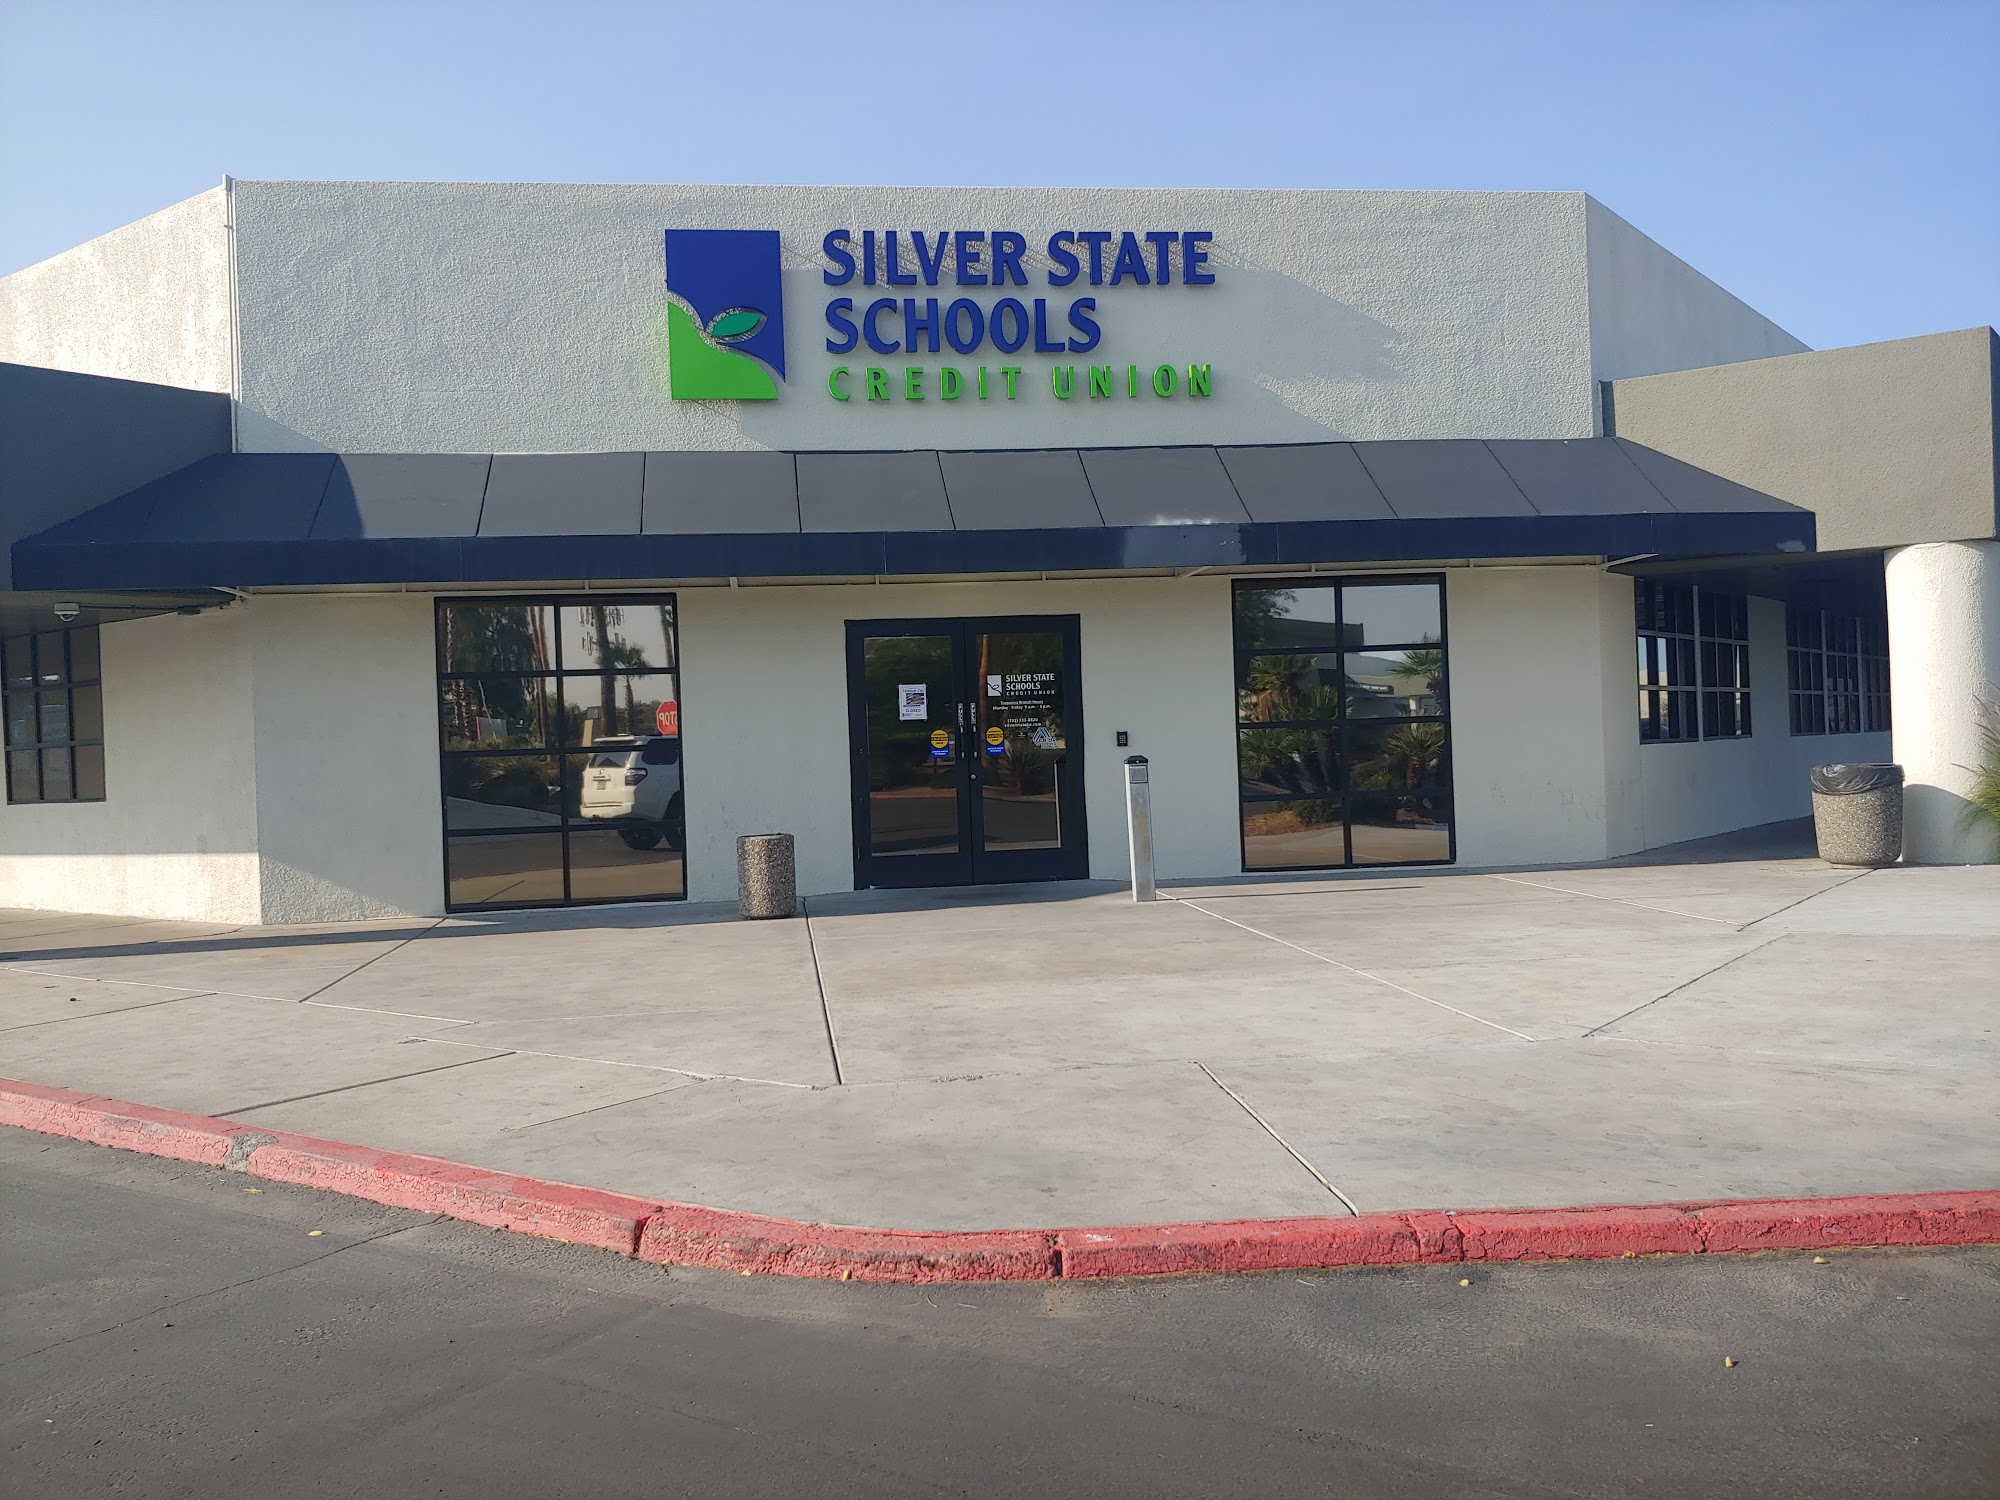 Silver State Schools Credit Union